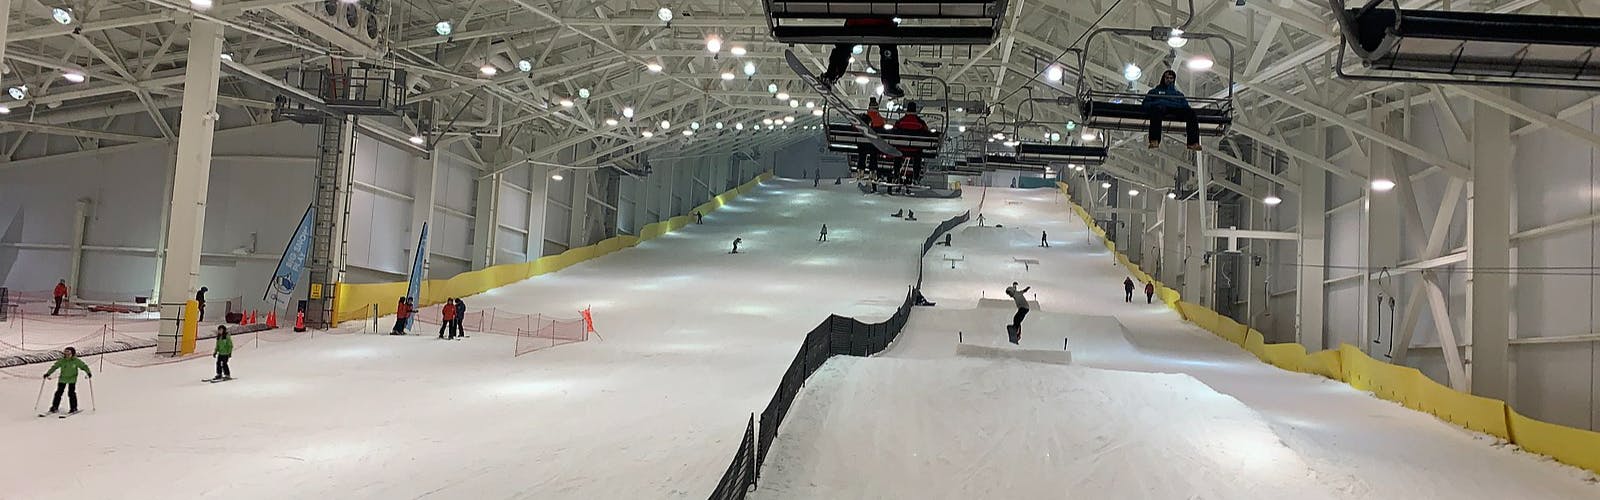 People ride a charilift at an indoor ski facility. 